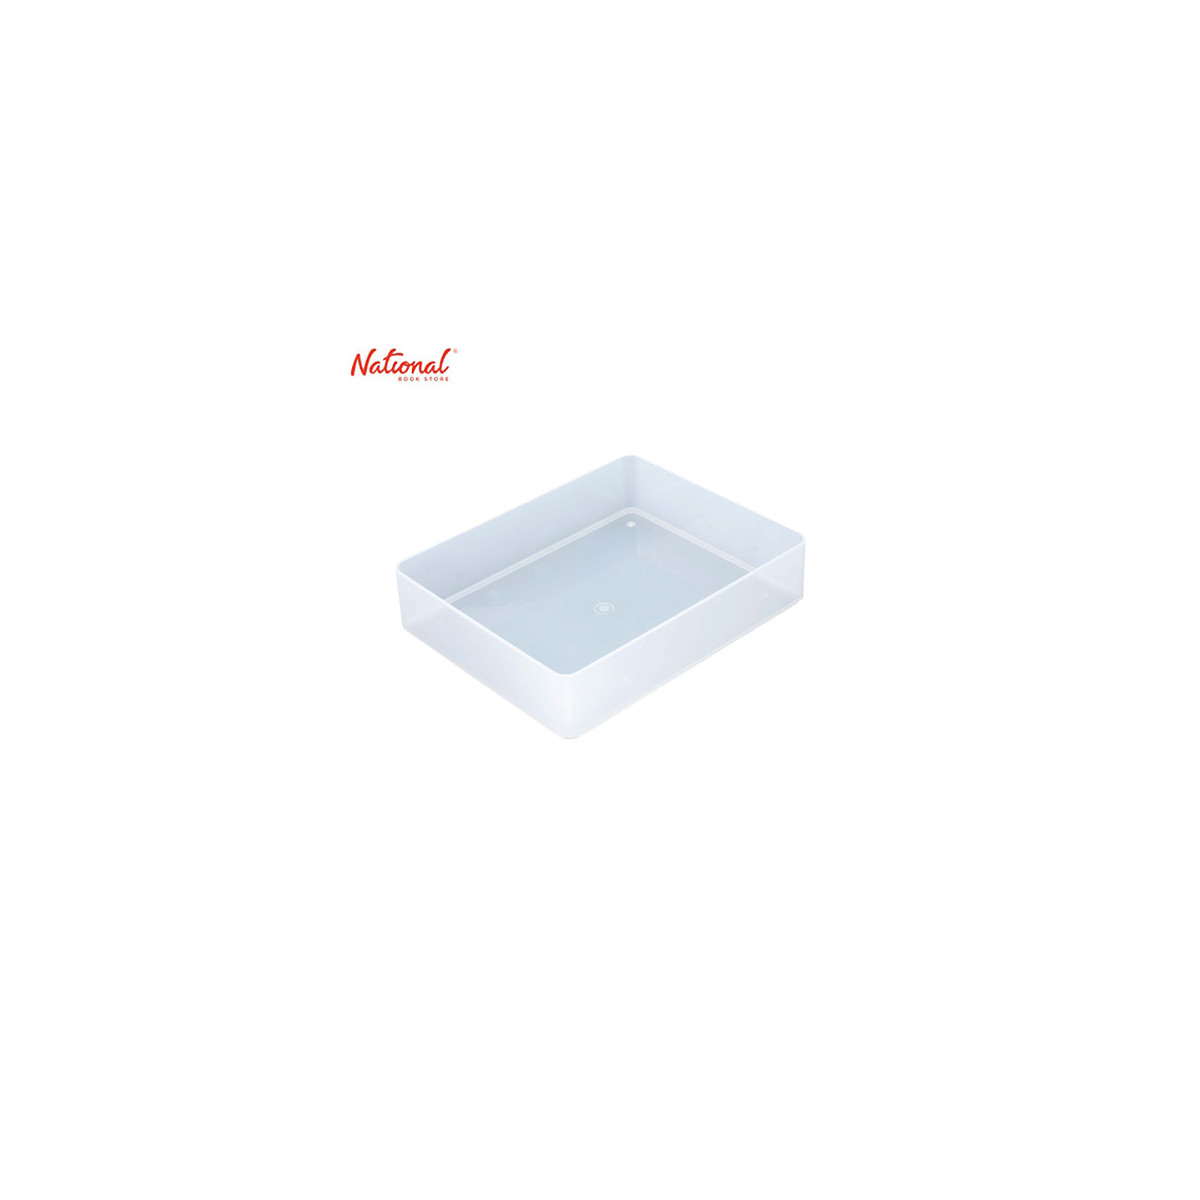 Olife Desk Organizer S-1620-T01 Translucent White Smart Blocks